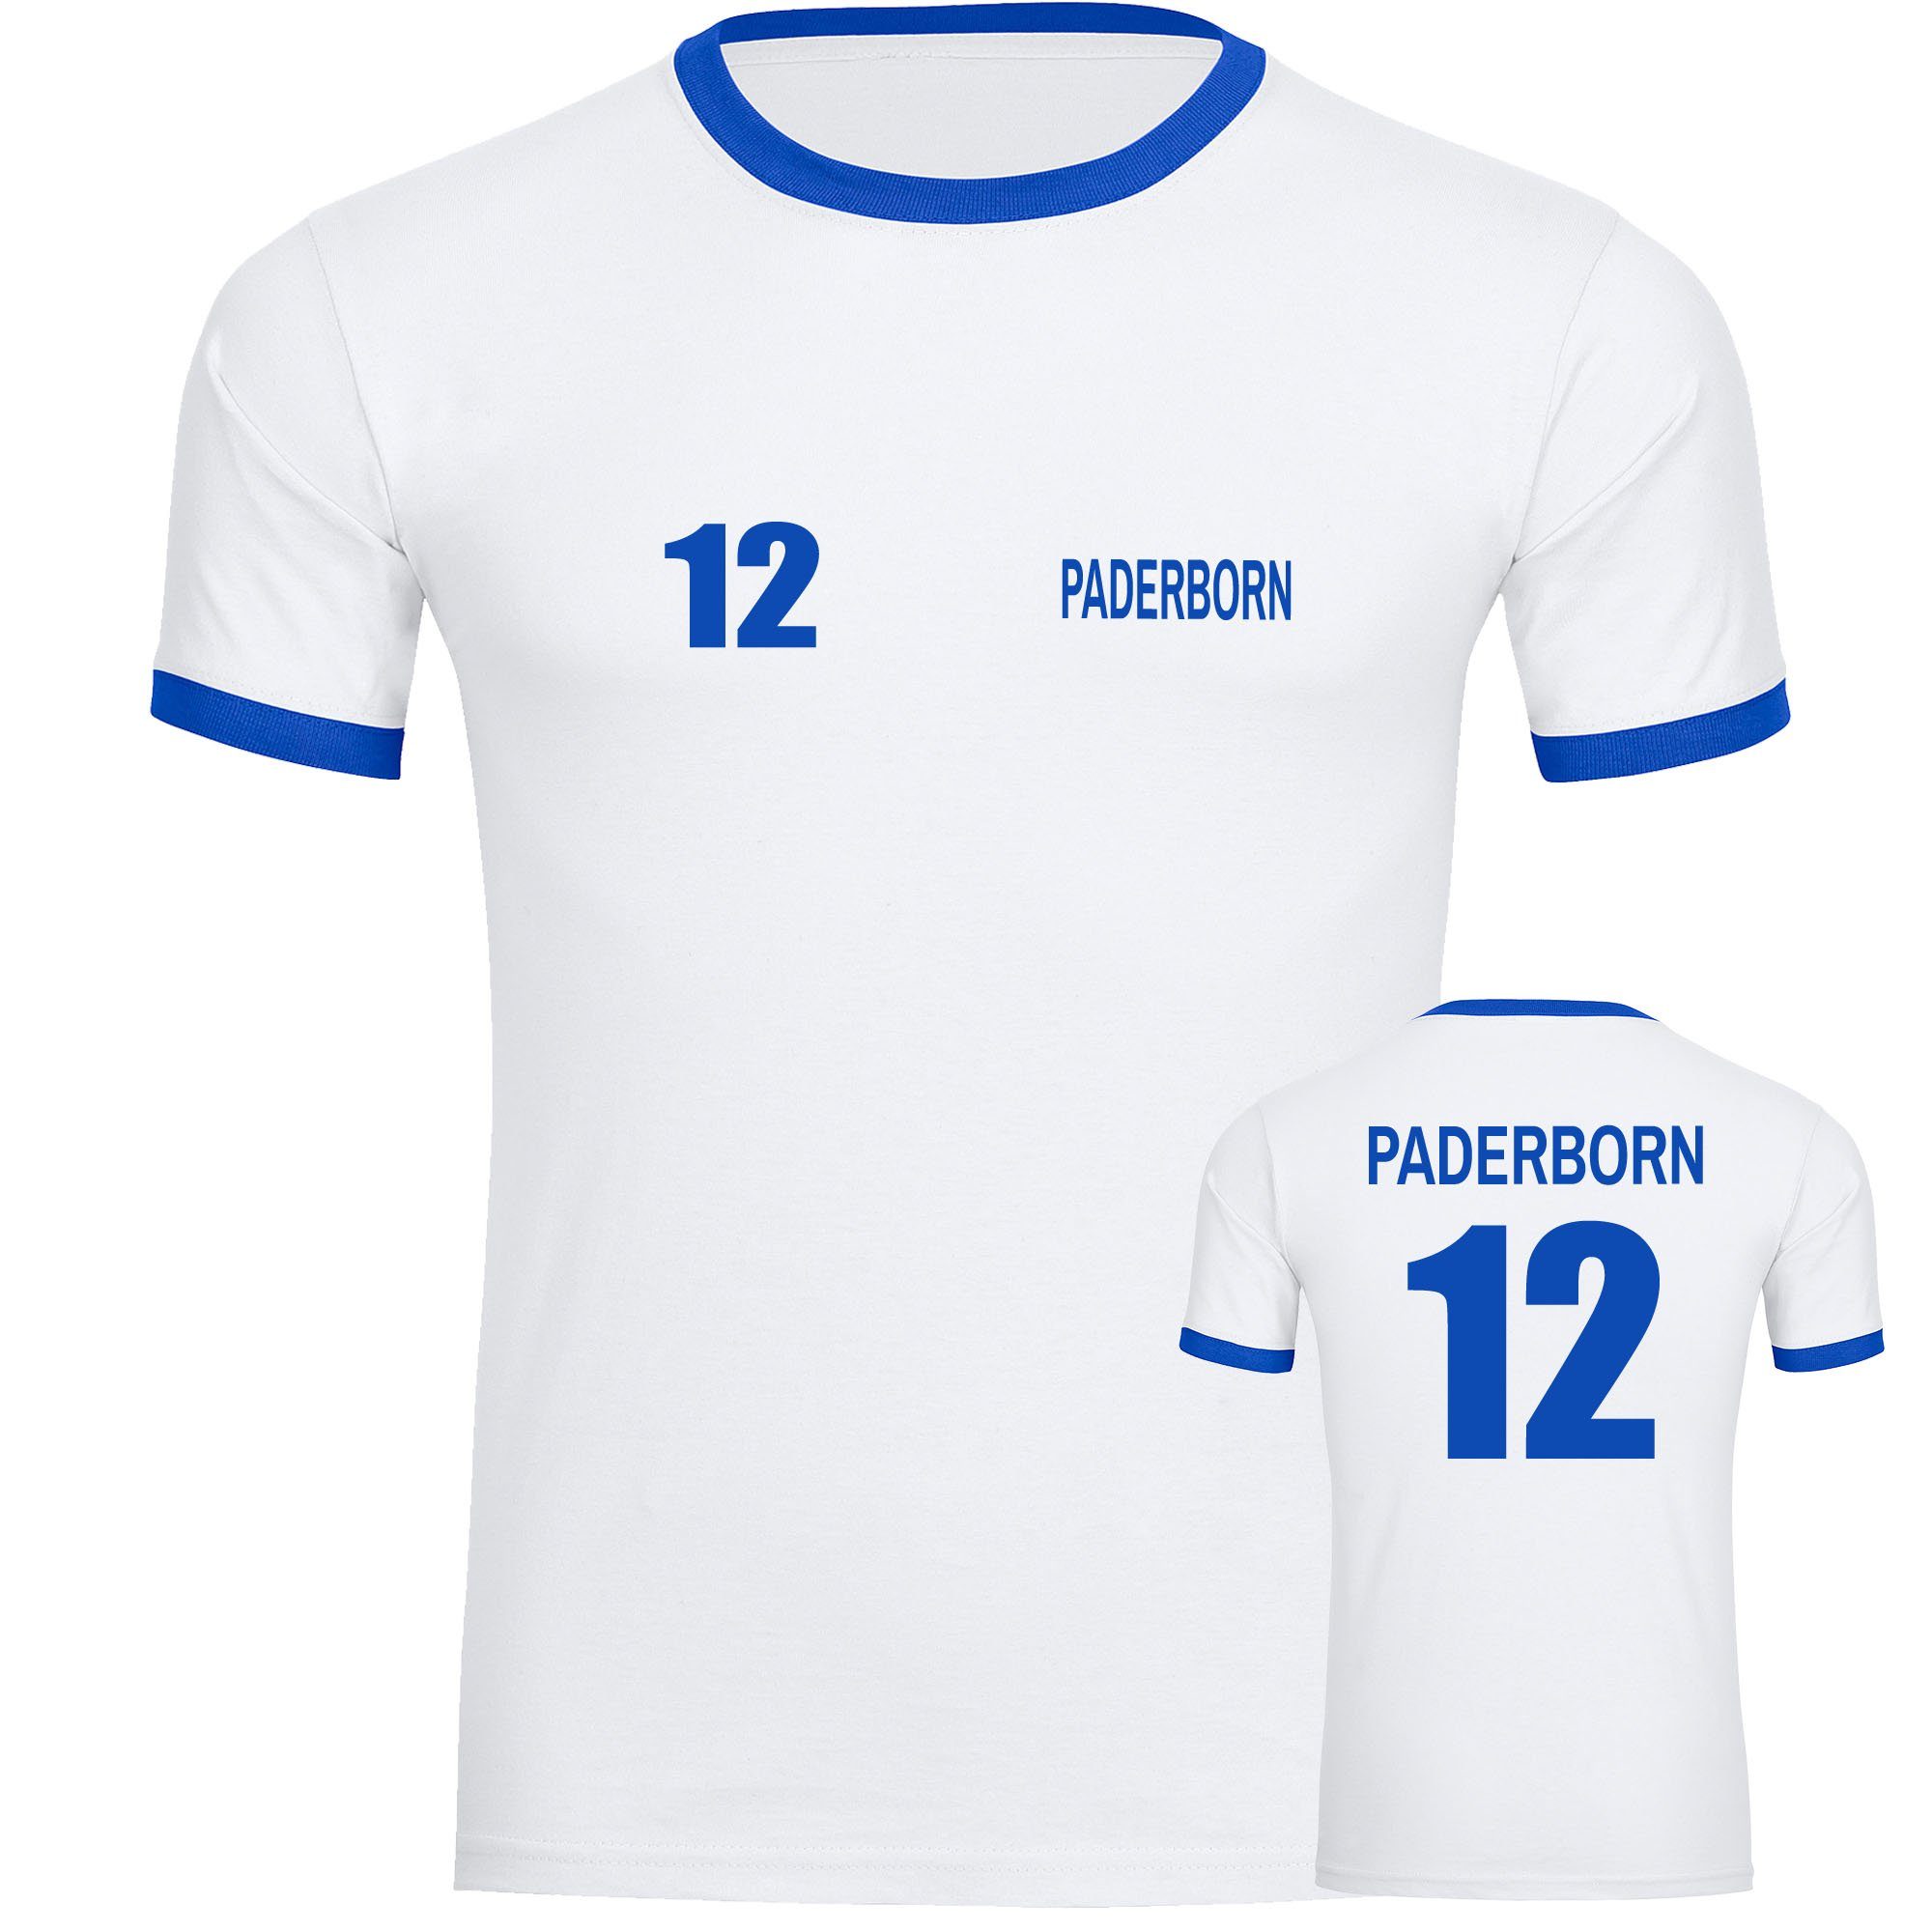 multifanshop T-Shirt Kontrast Paderborn - Trikot 12 - Männer